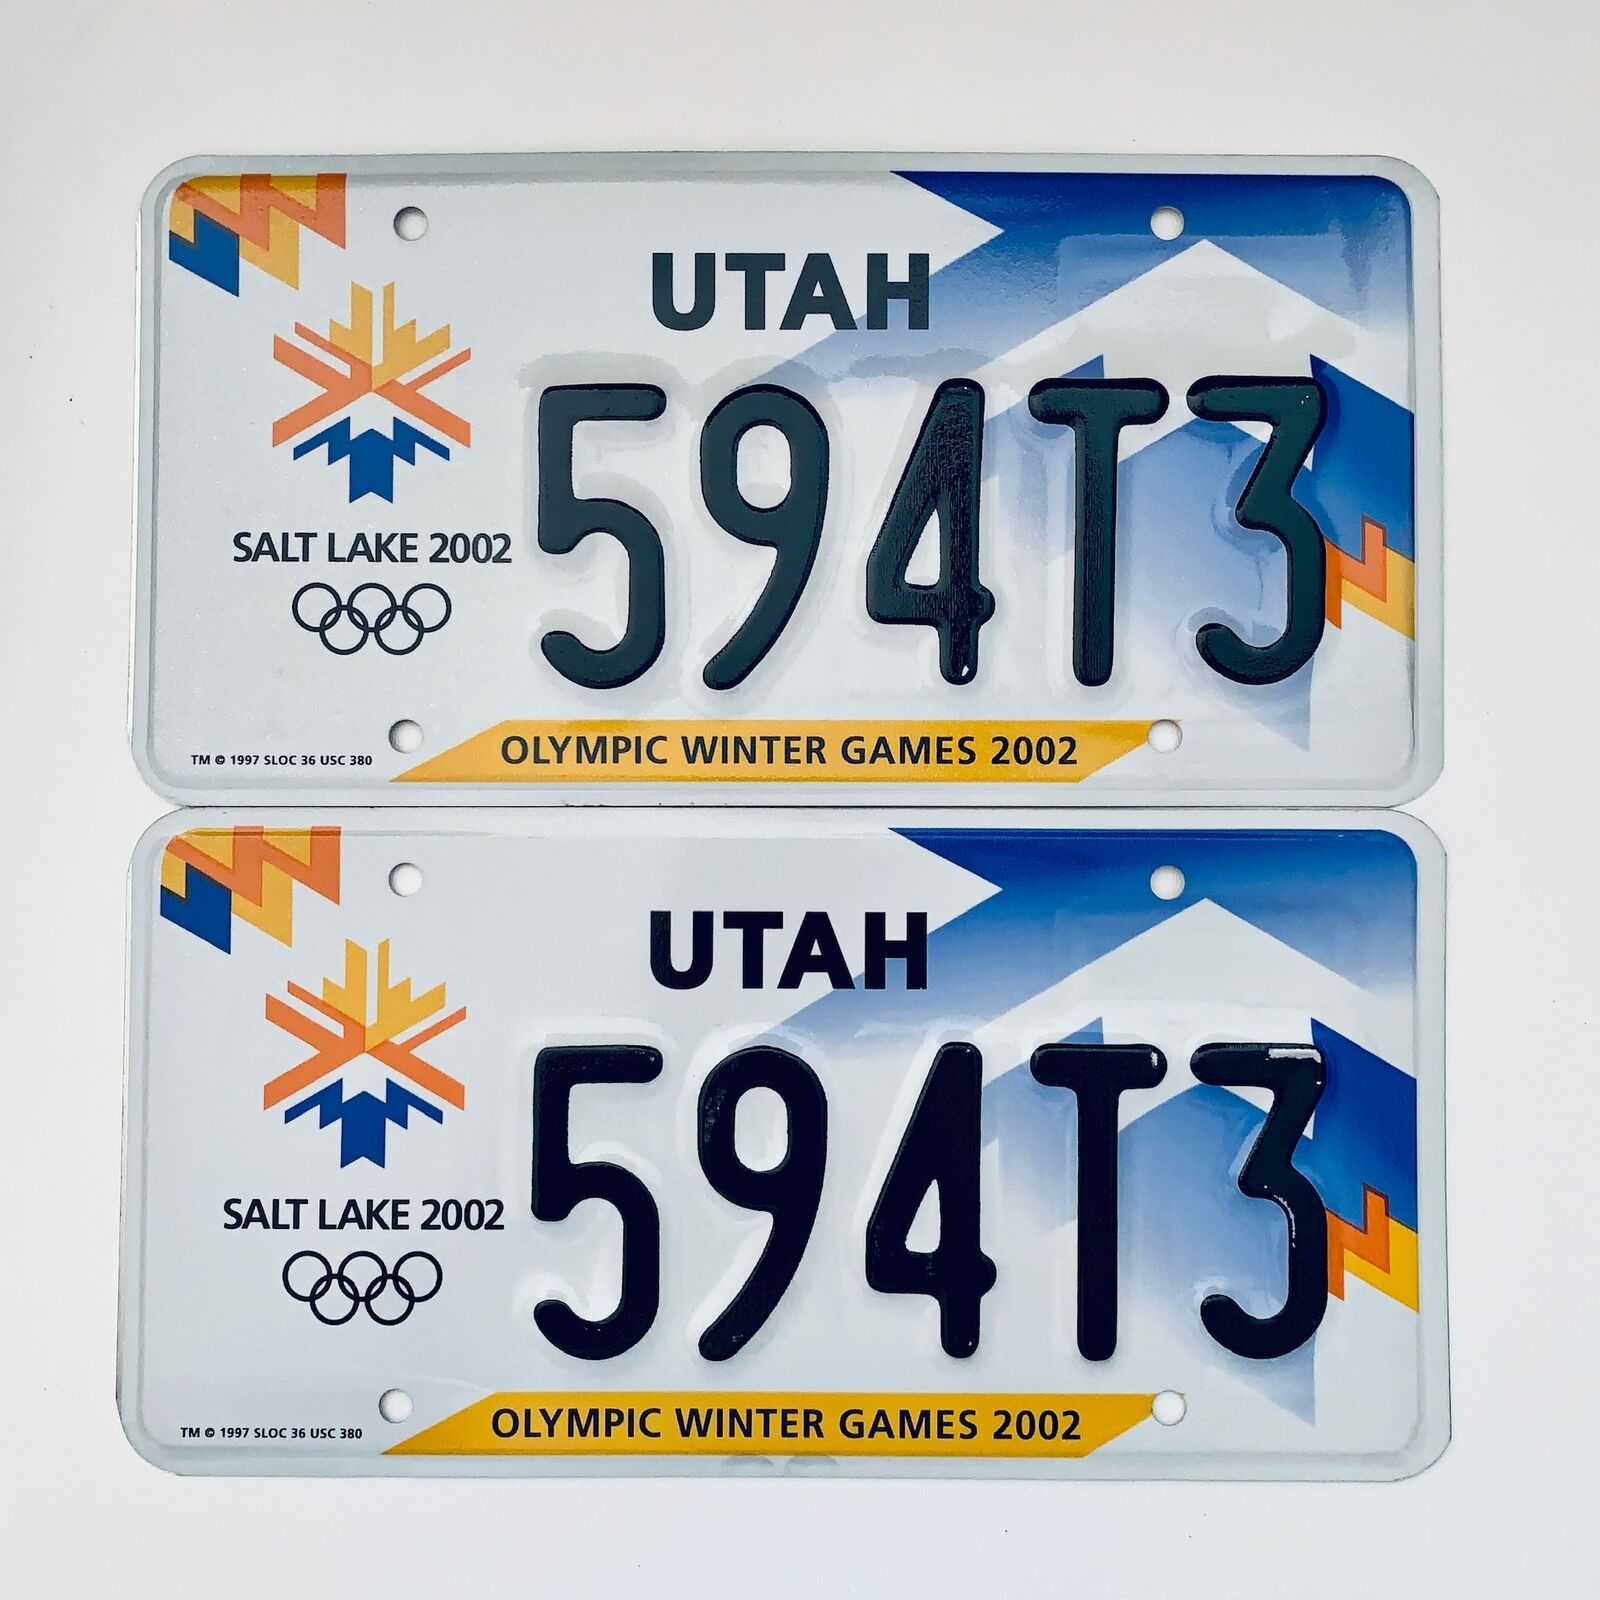 2002 United States Utah Olympic Winter Games 2002 Passenger License Plate 594t3